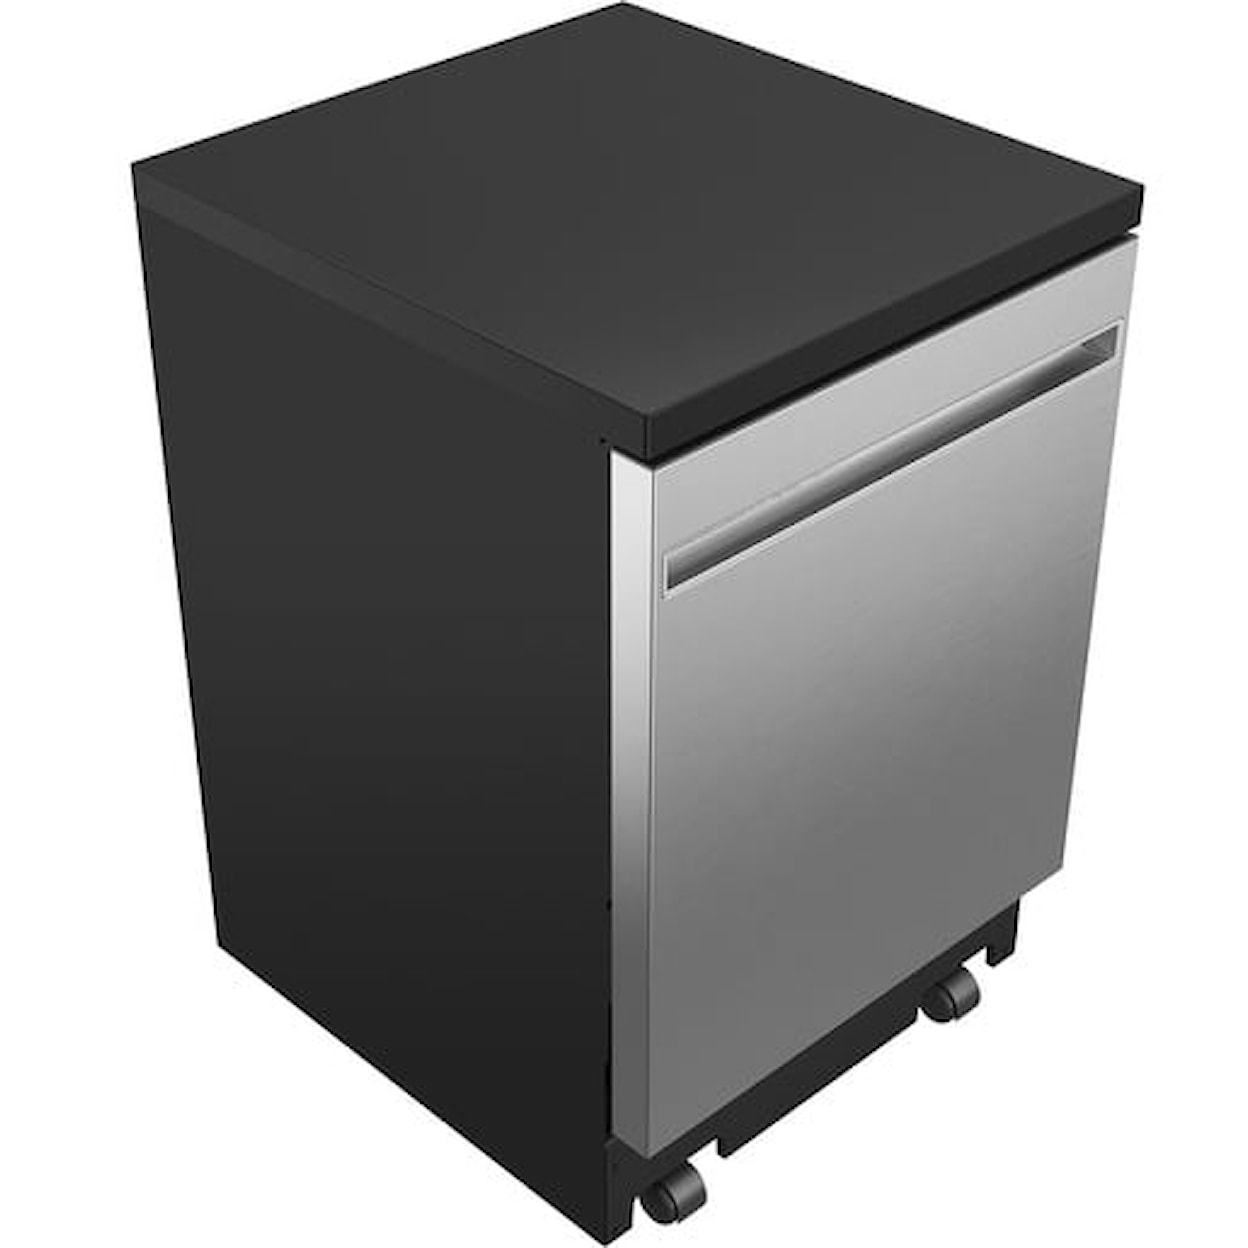 GE Appliances Dishwashers Stainless Steel Interior Portable Dishwasher